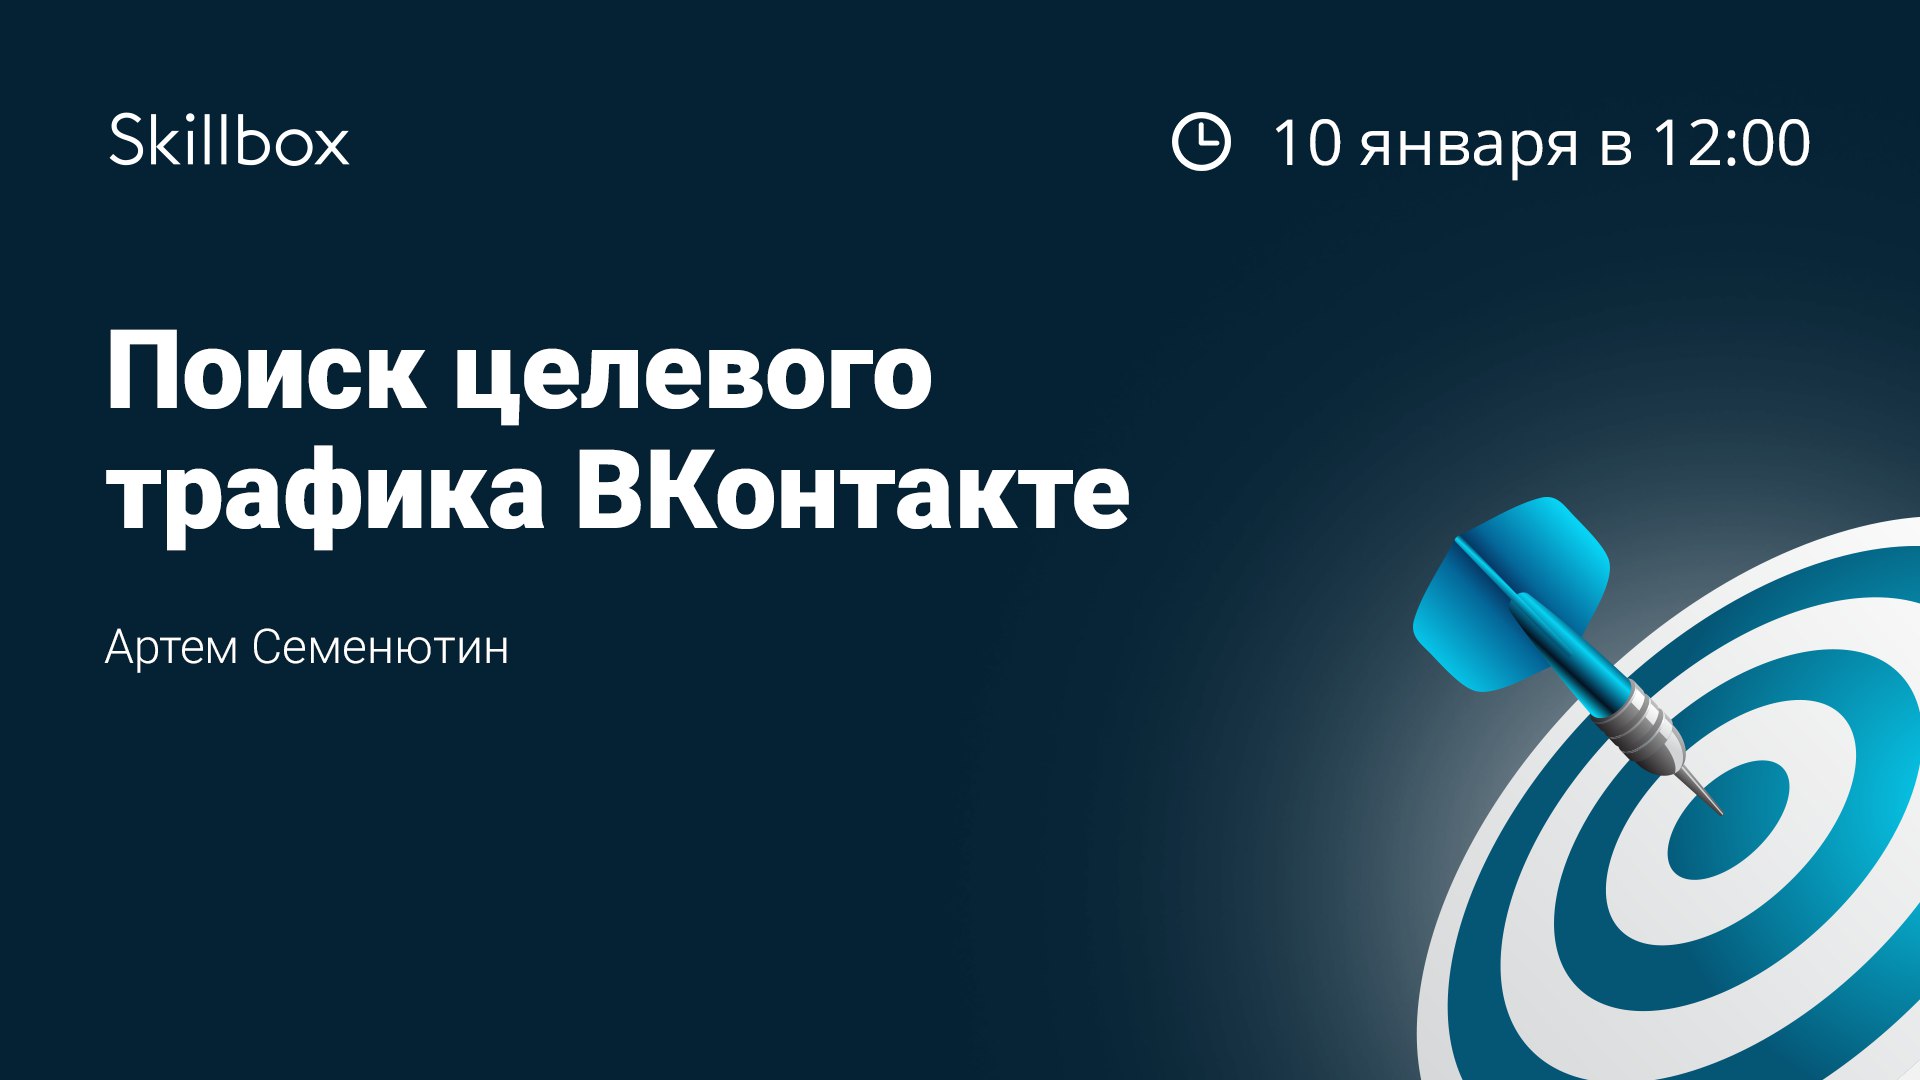 Поиск целевого трафика ВКонтакте - Семенютин.jpg